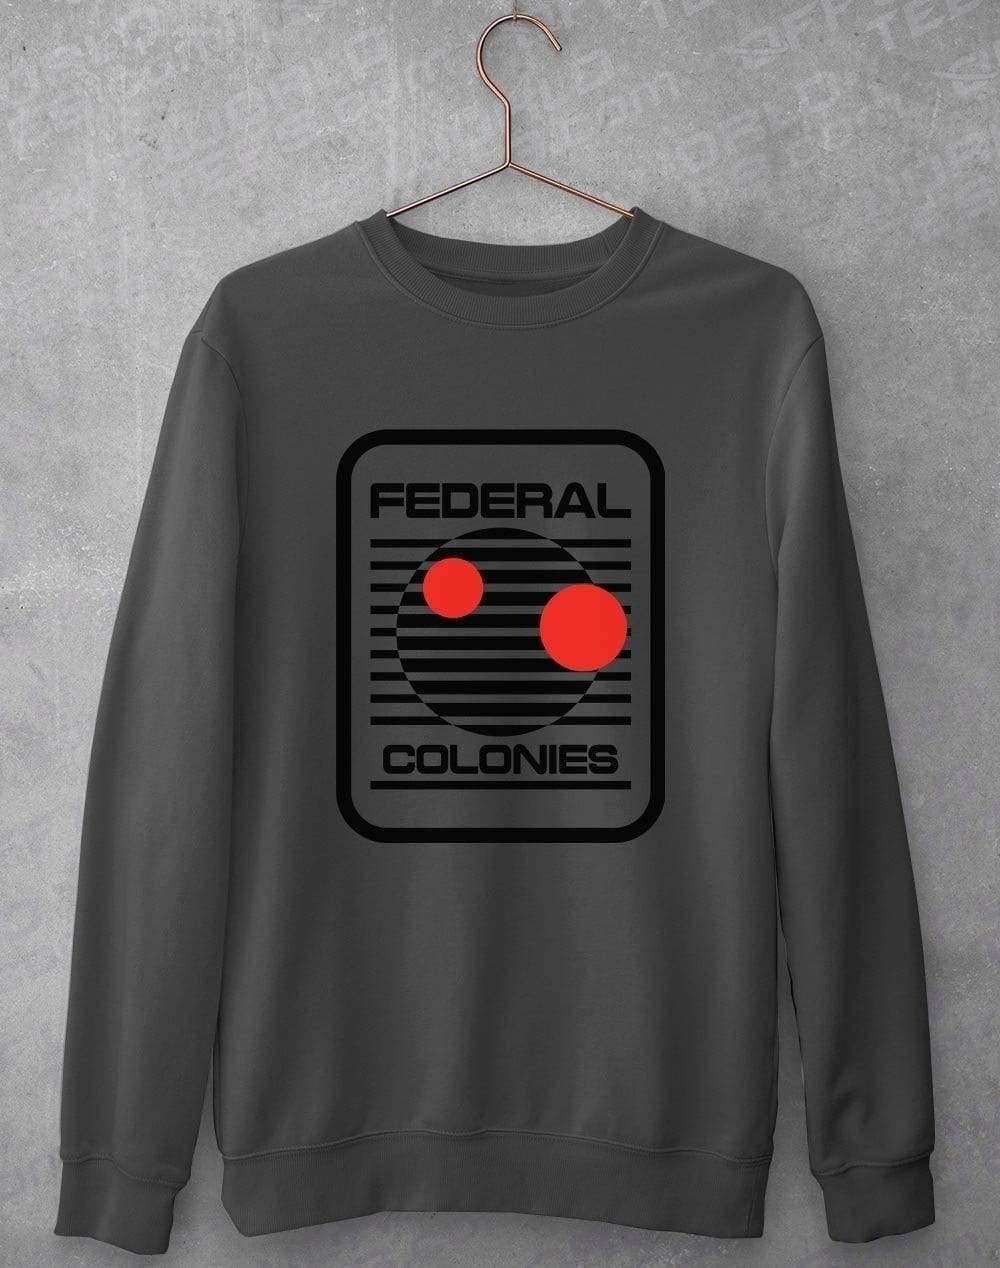 Federal Colonies Sweatshirt S / Charcoal  - Off World Tees